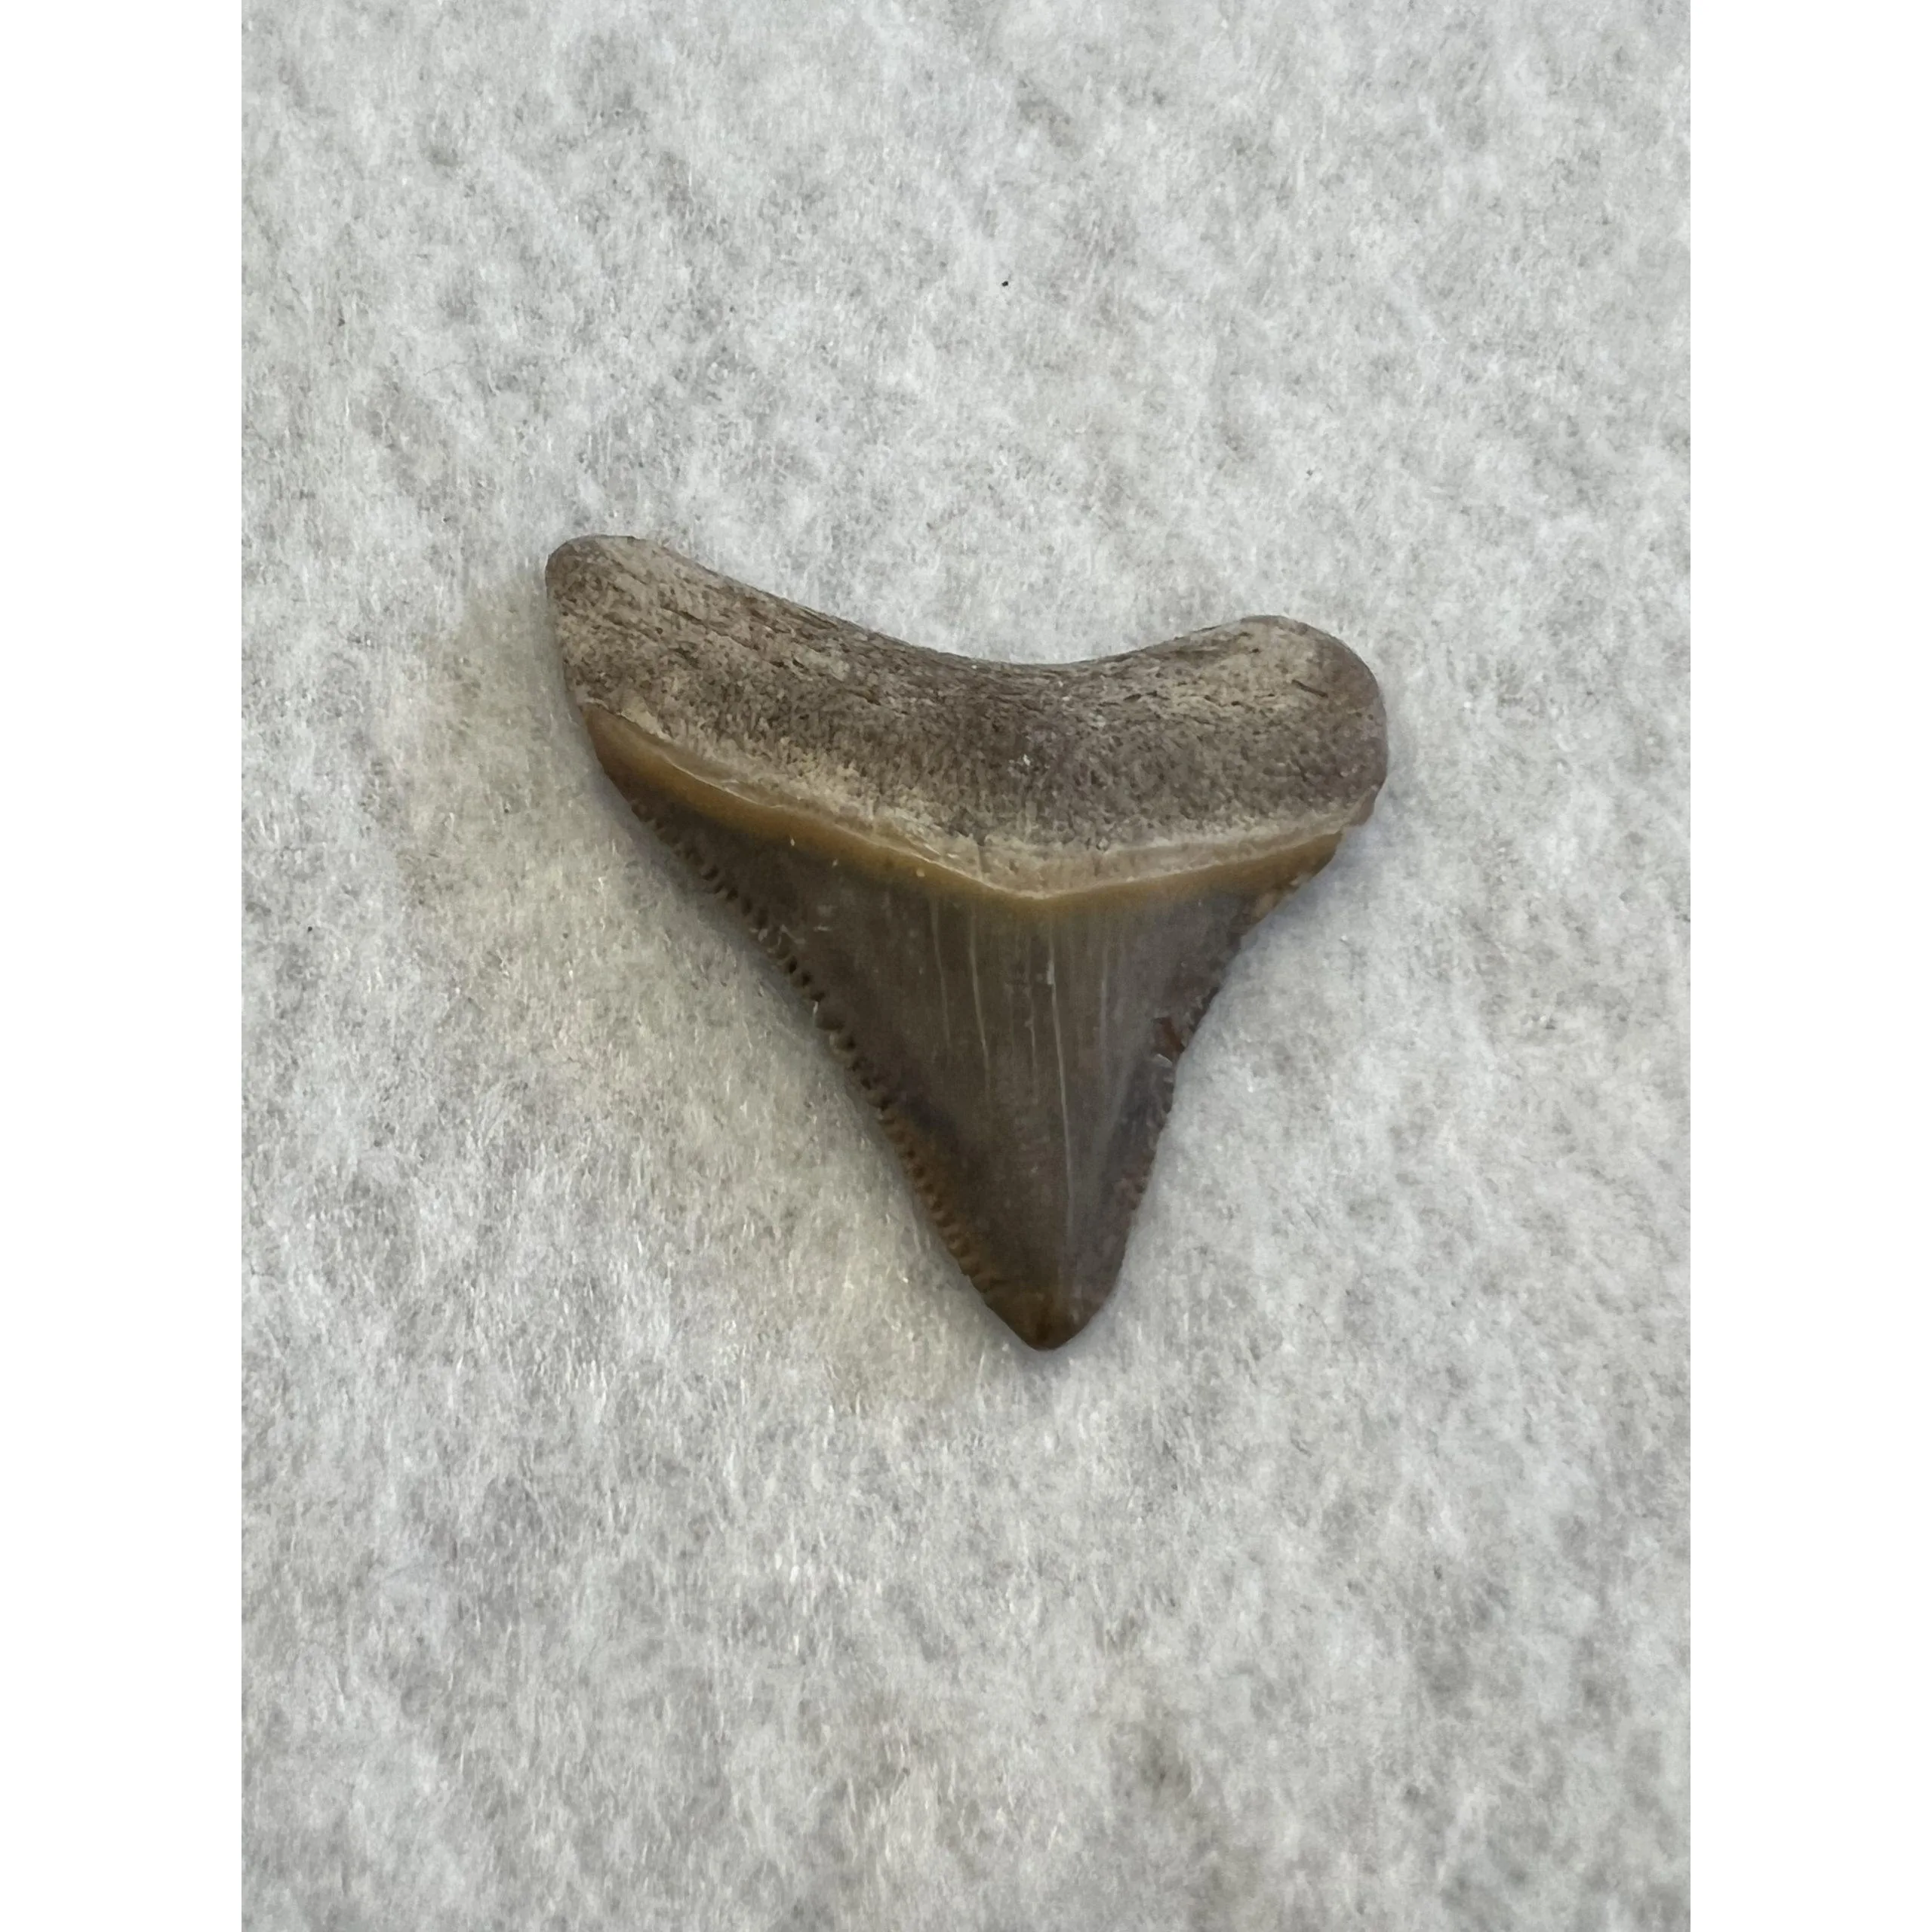 Megalodon Tooth, Bone Valley, Florida, 1.56 inch Prehistoric Online